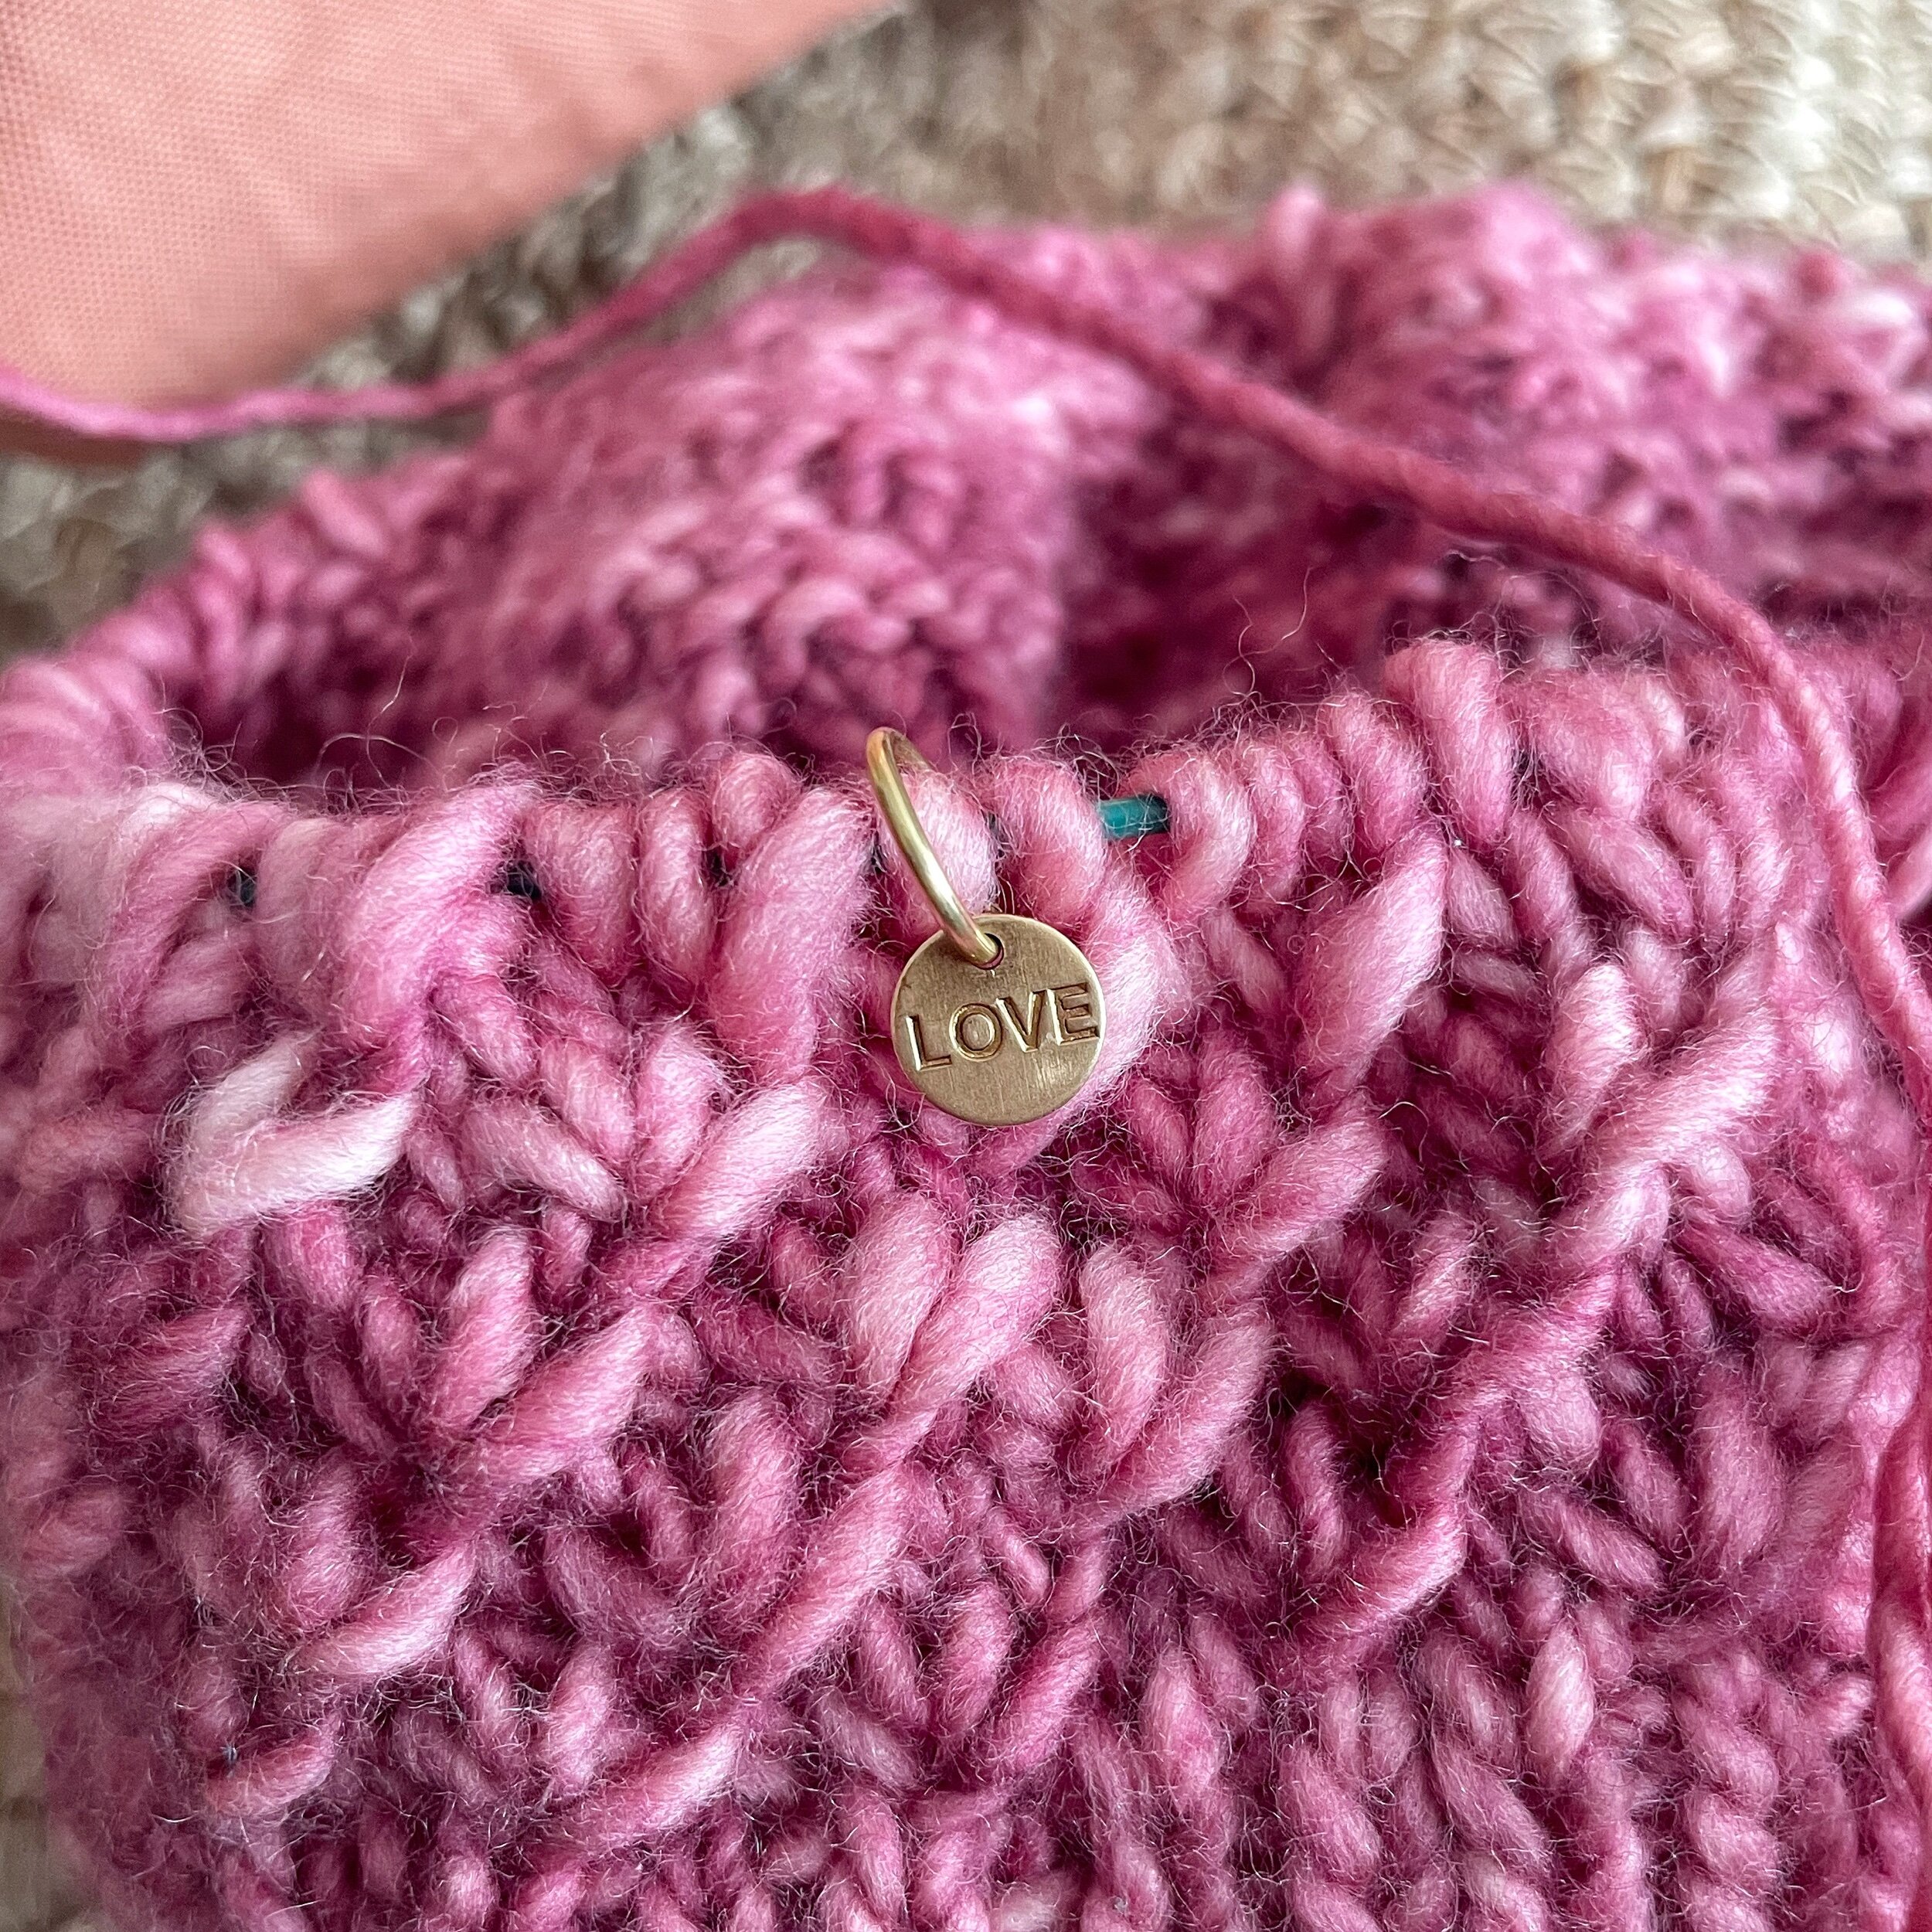 Stitch Marker Size 10 Needles Copper Fiber Knitting Wool Blue